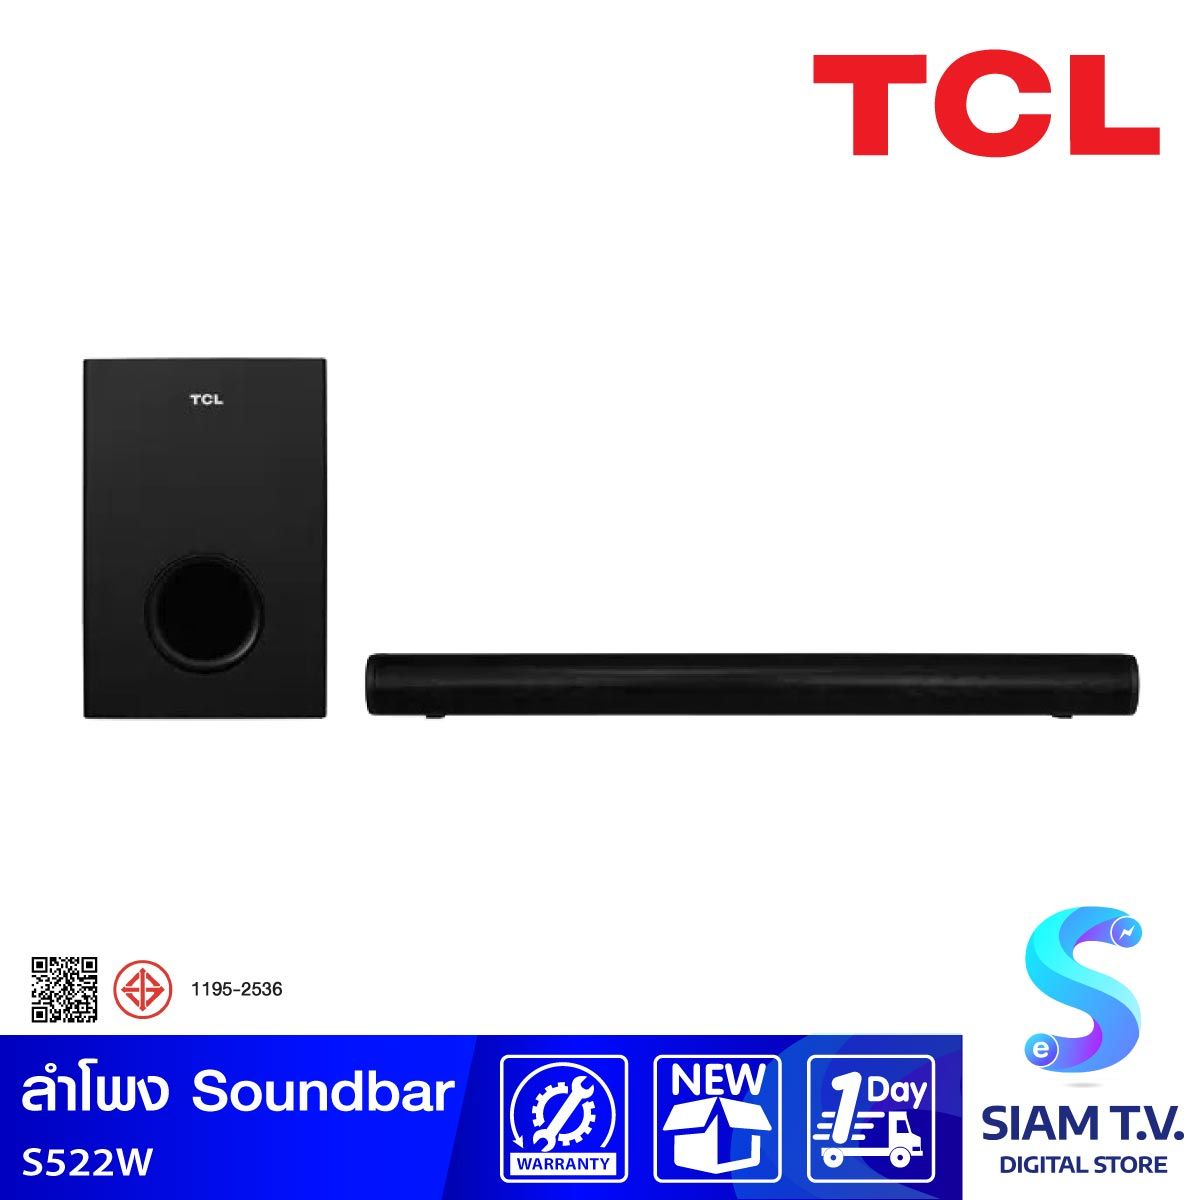 TCL ชุดเครื่องเสียง Soundbar 200W 2.1 CH รุ่น S522W ลำโพงซาวด์บาร์ Wireless Subwoofer